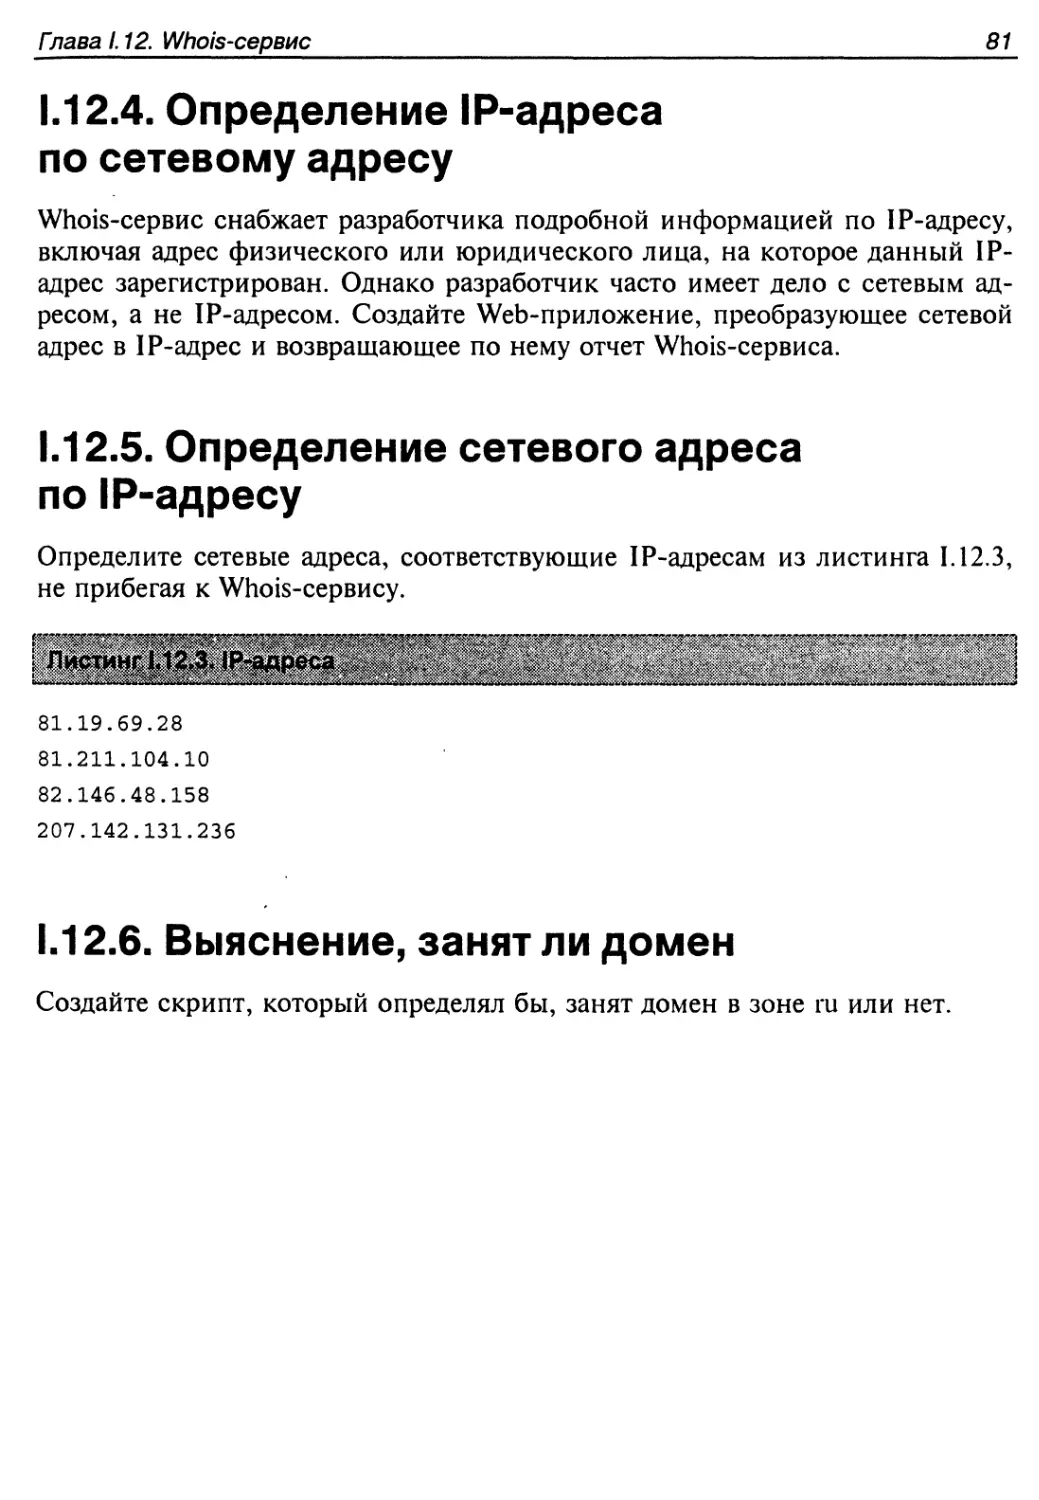 1.12.4. Определение IP-адреса по сетевому адресу
1.12.5. Определение сетевого адреса по IP-адресу
1.12.6. Выяснение, занят ли домен